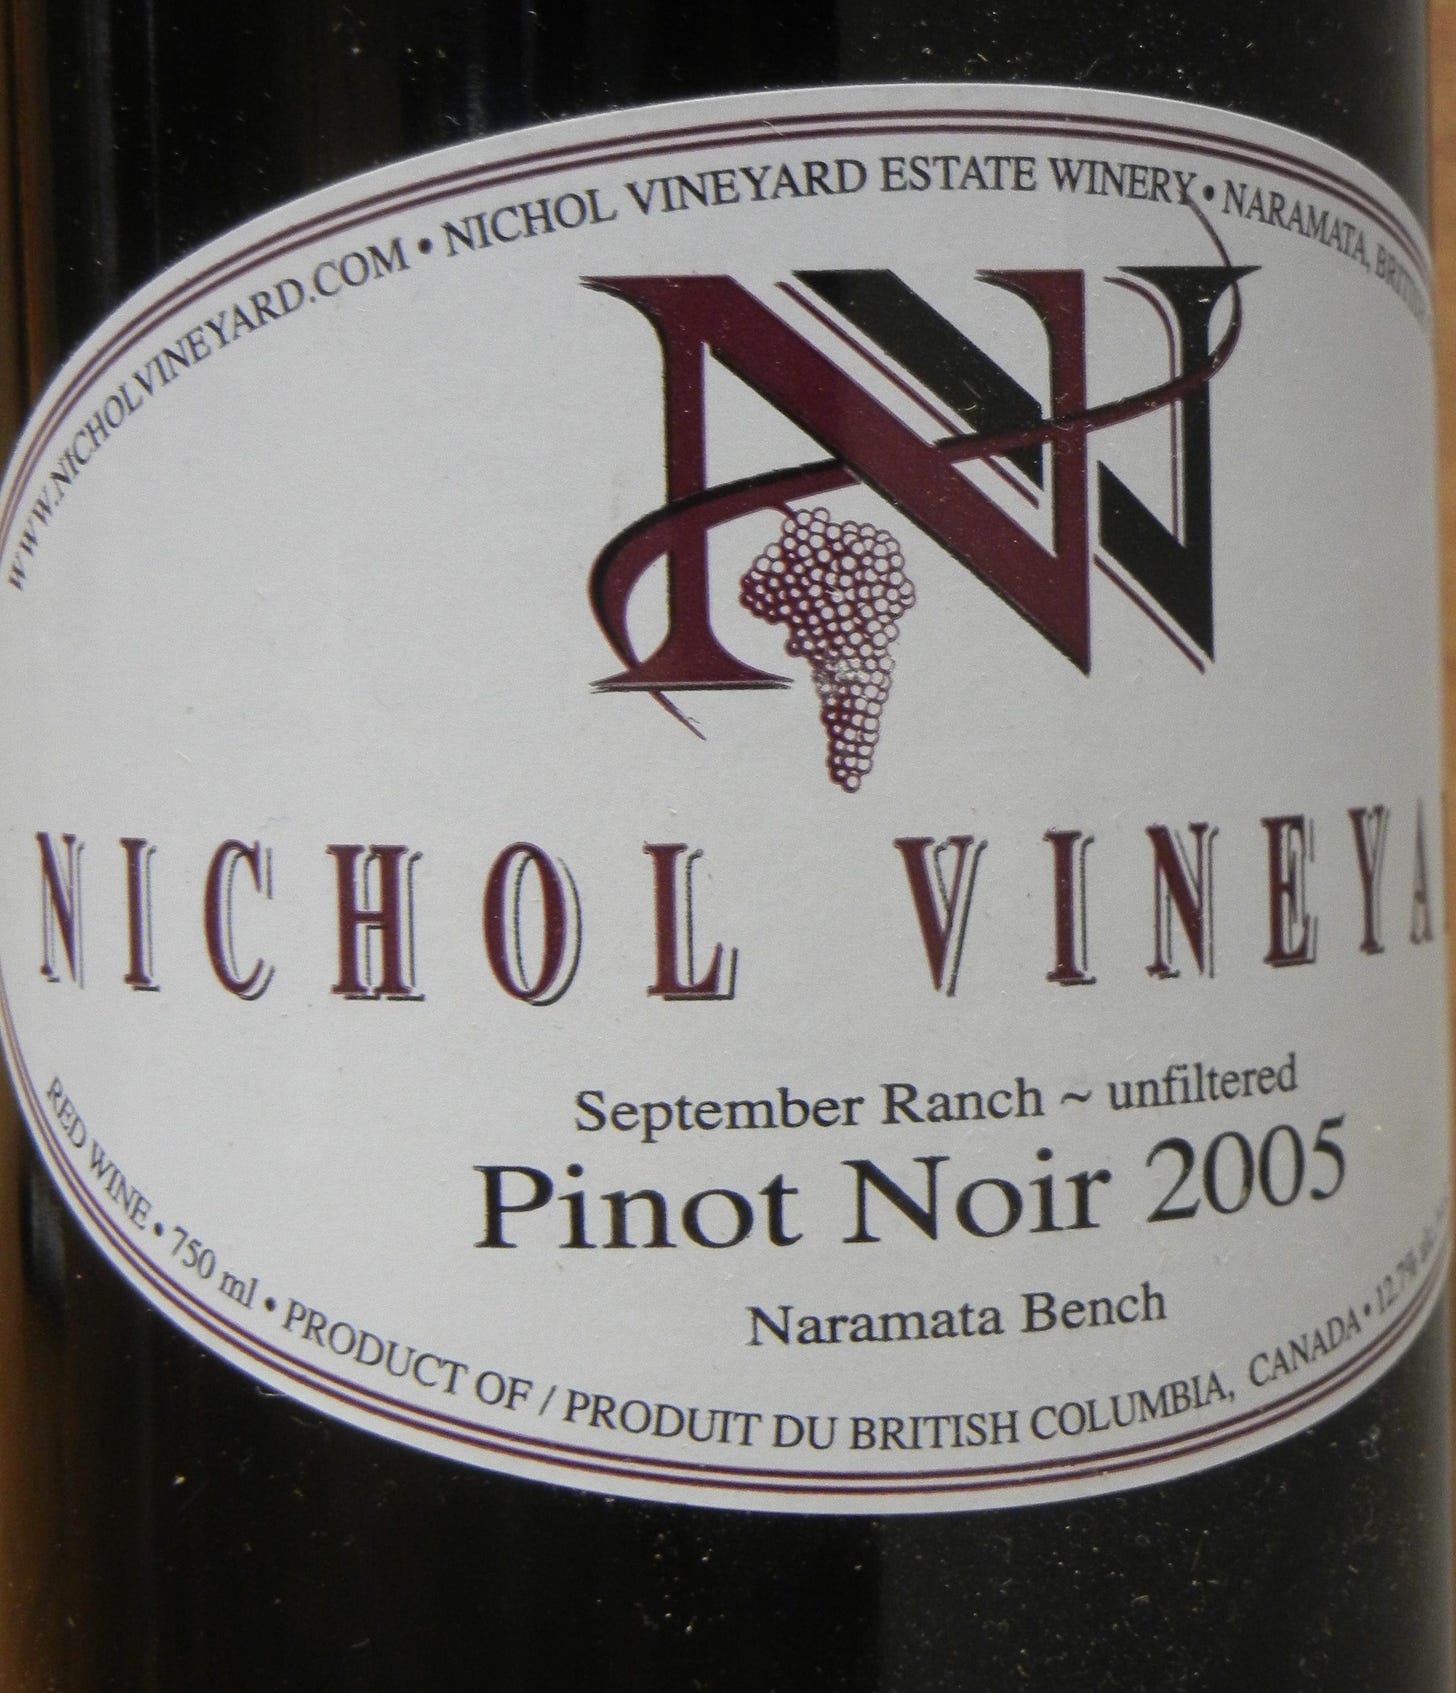 Nichol Vineyard Pinot Noir 2005 Label - BC Pinot Noir Tasting Review 3